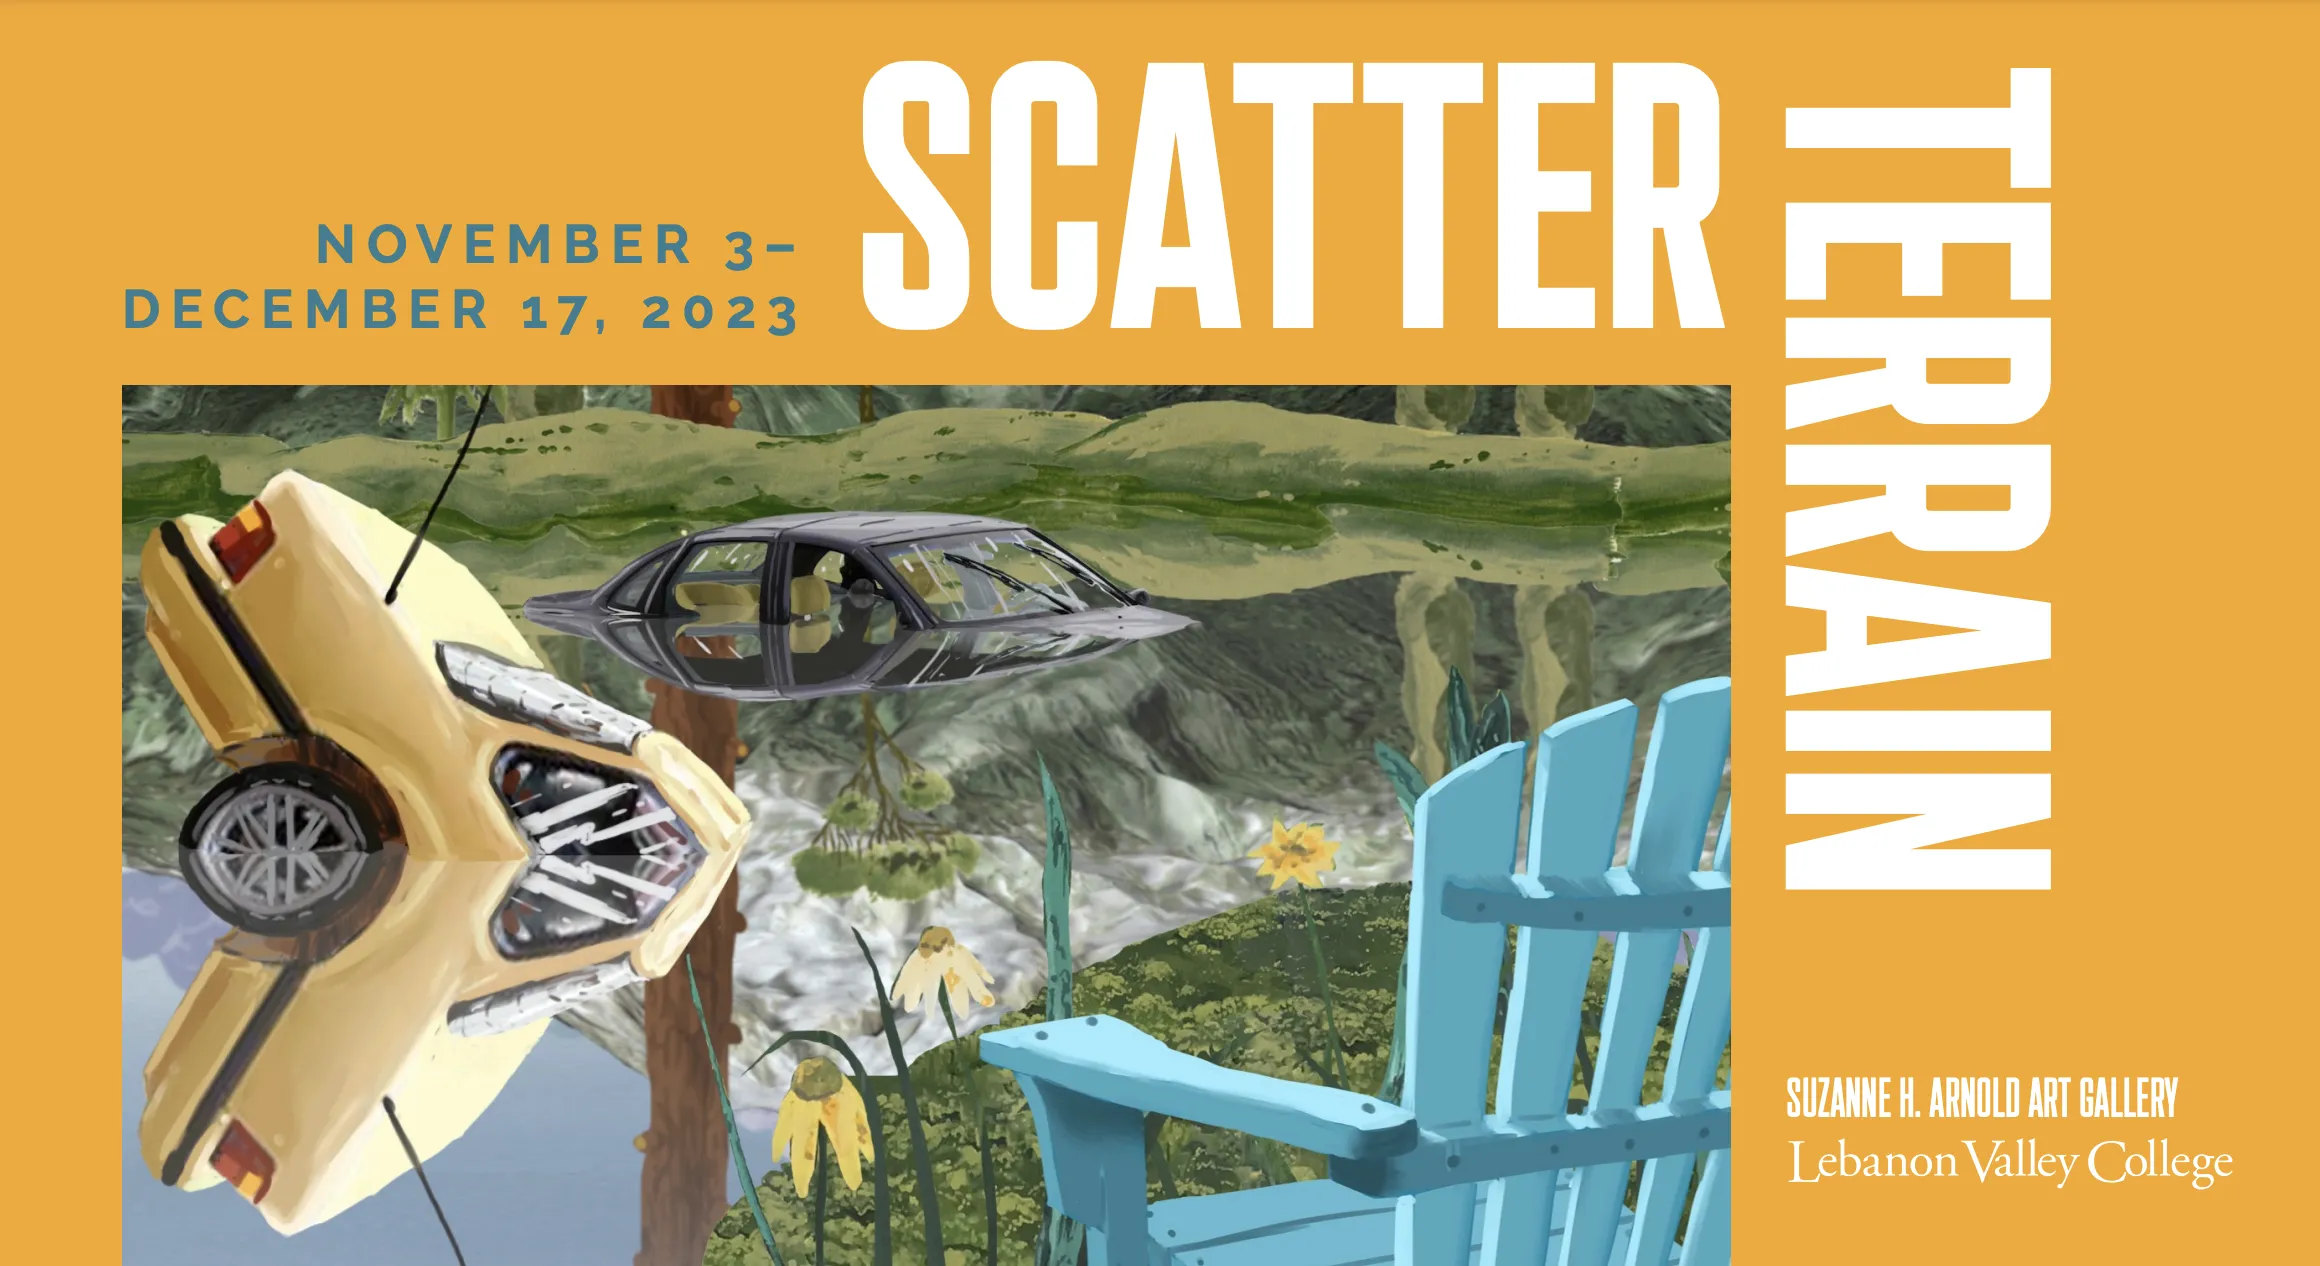 Scatter Terrain exhibit poster featuring Dan Rule, Magic Mountain, 2020, animation, 10 min